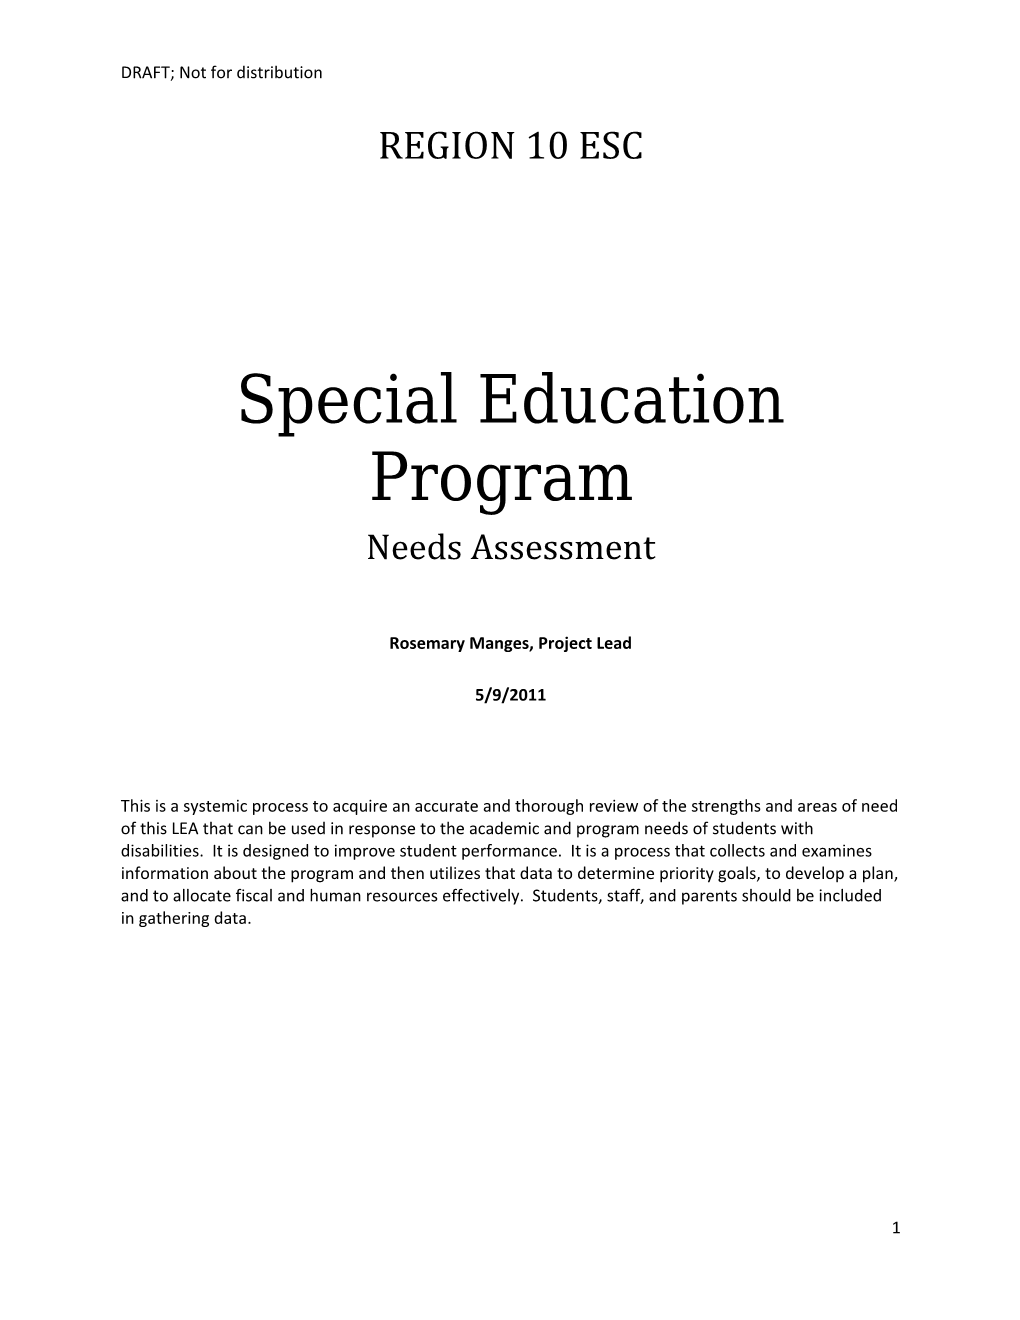 Special Education Program